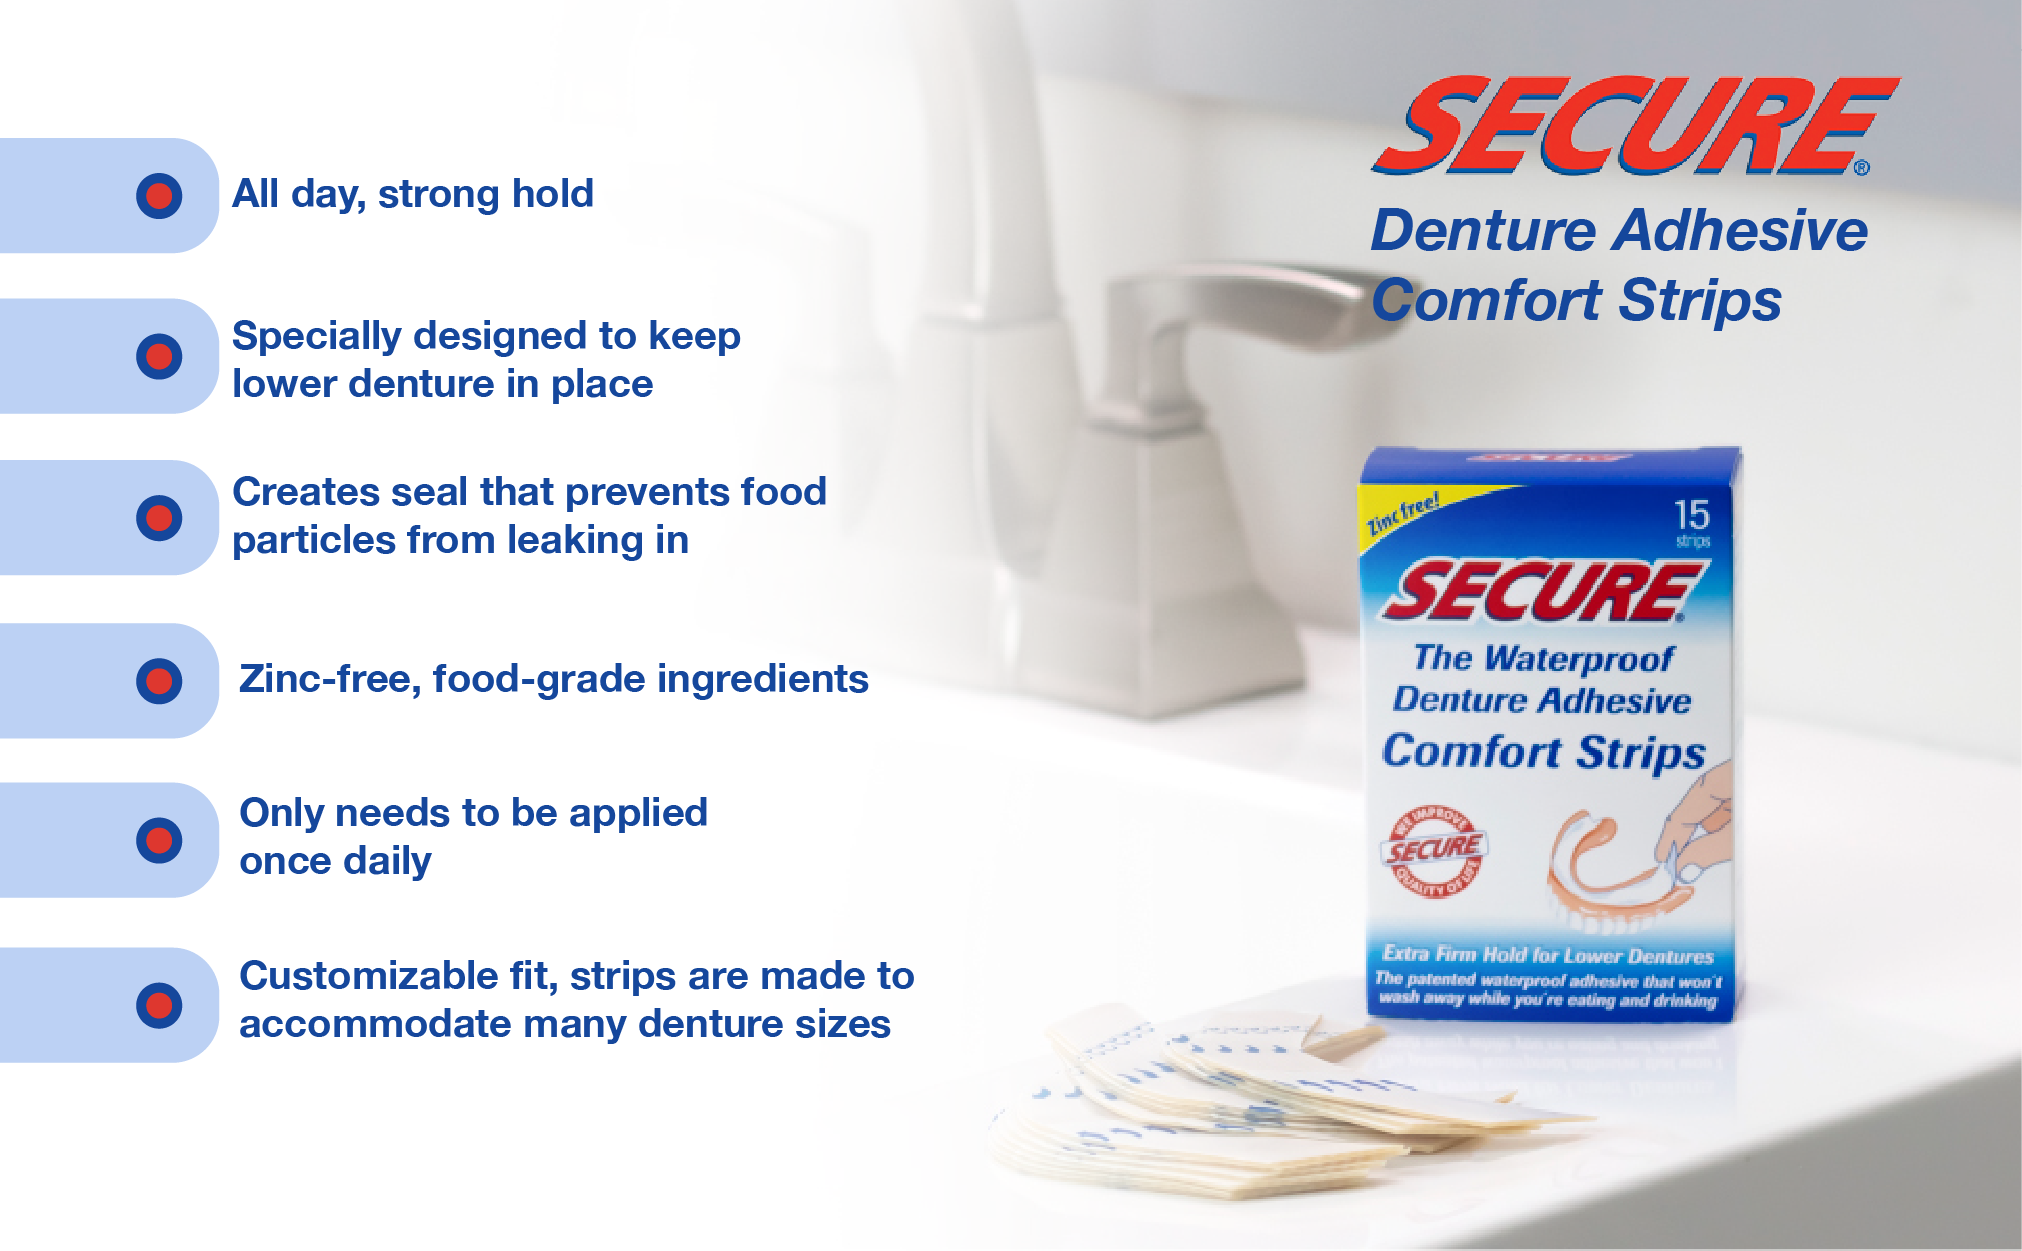 Secure Denture Adhesive Cushion Strips, Secure Denture Adhesive